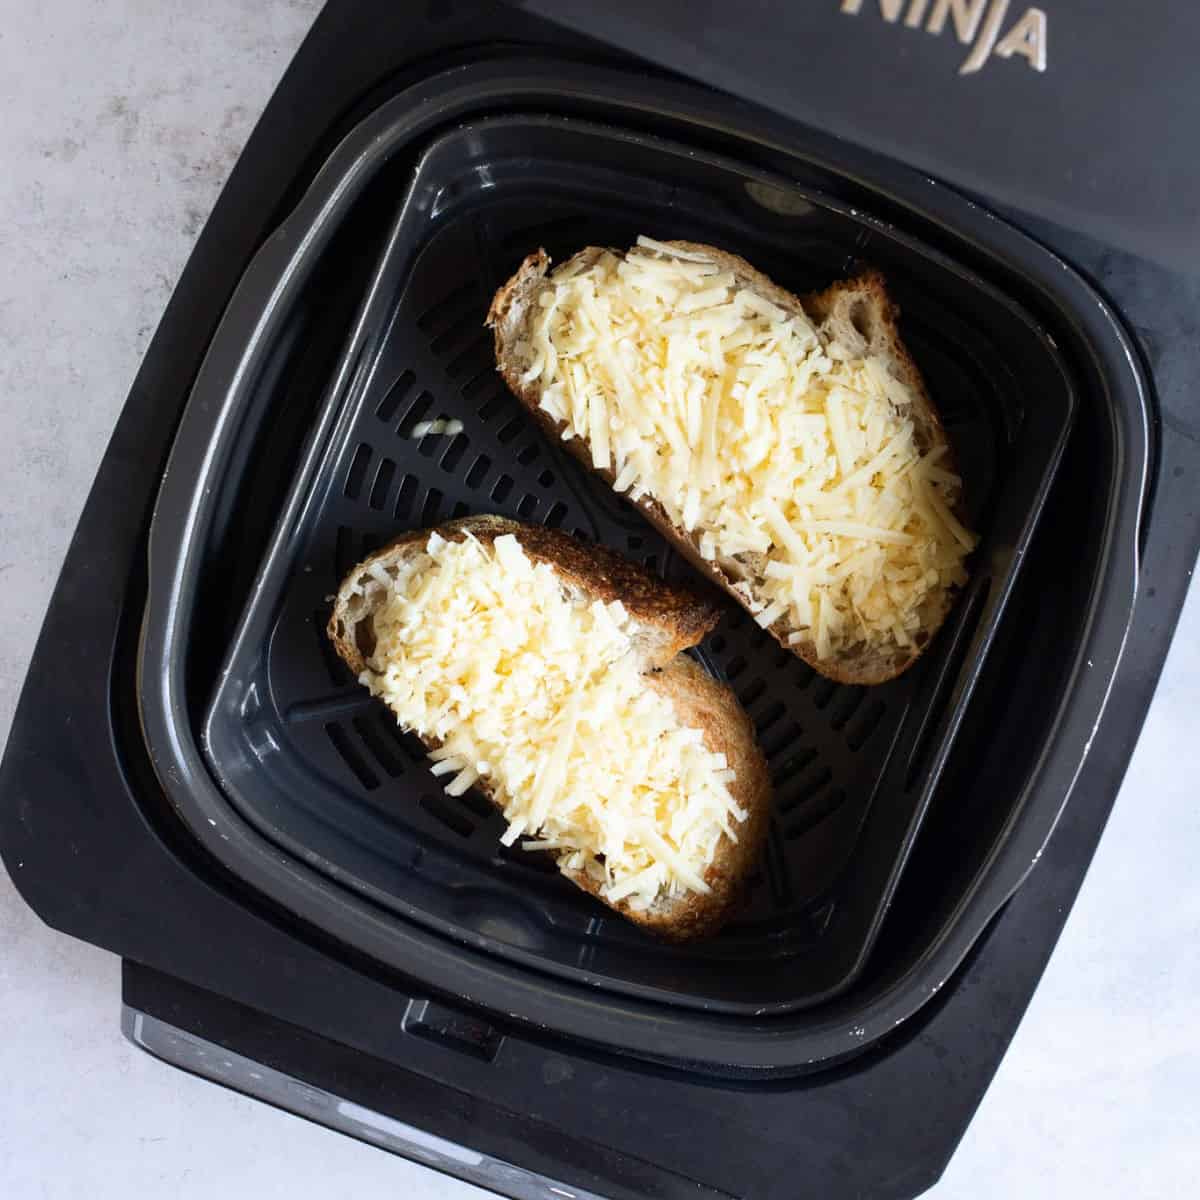 How to Make Toast in Air Fryer - Ninja Foodi Toast